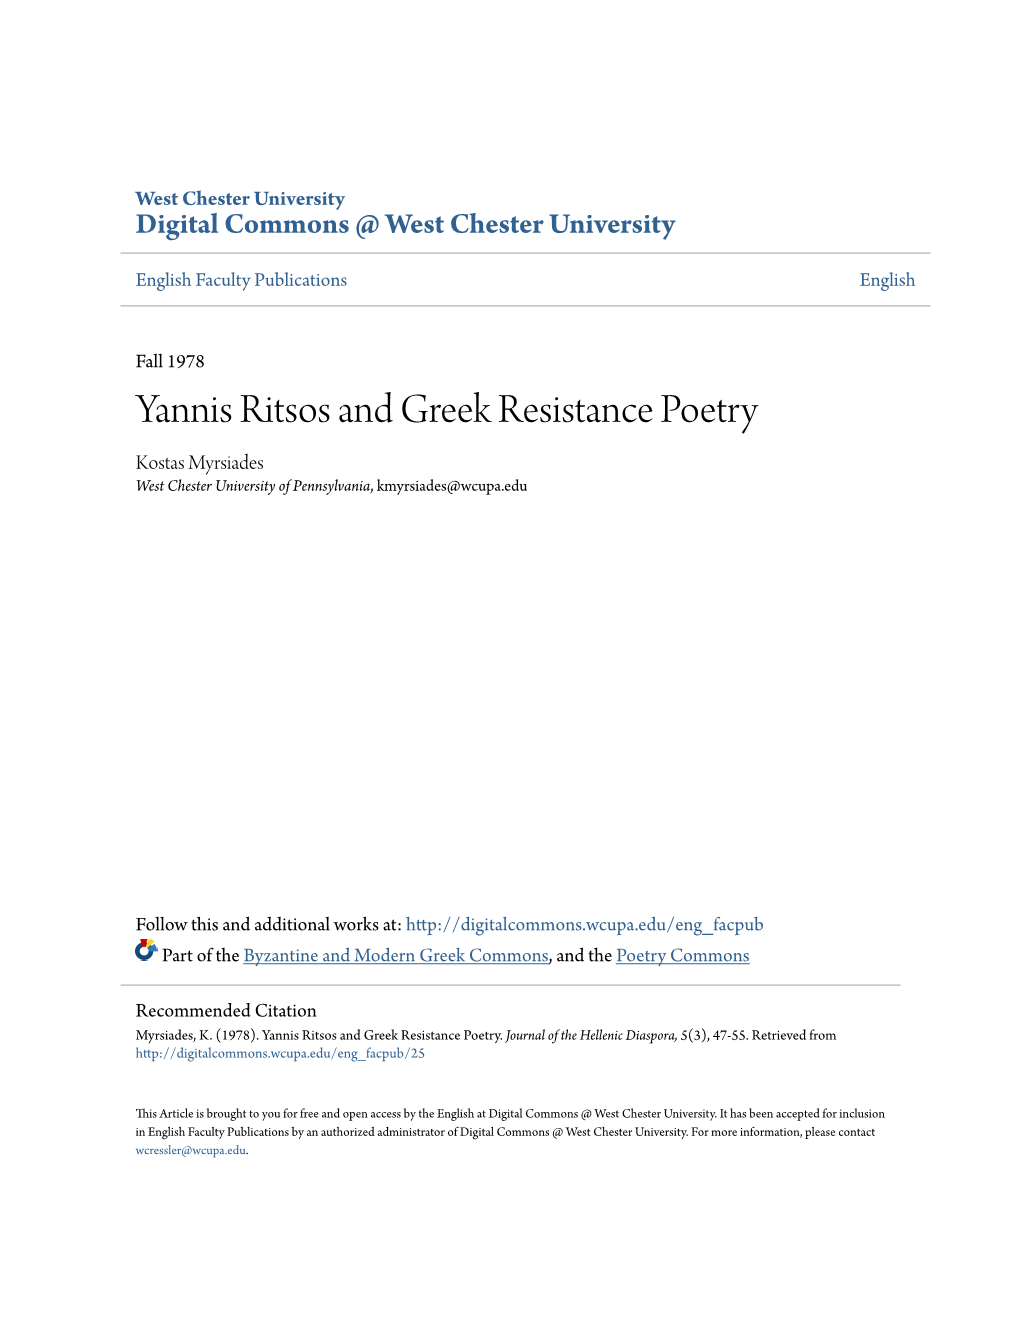 Yannis Ritsos and Greek Resistance Poetry Kostas Myrsiades West Chester University of Pennsylvania, Kmyrsiades@Wcupa.Edu